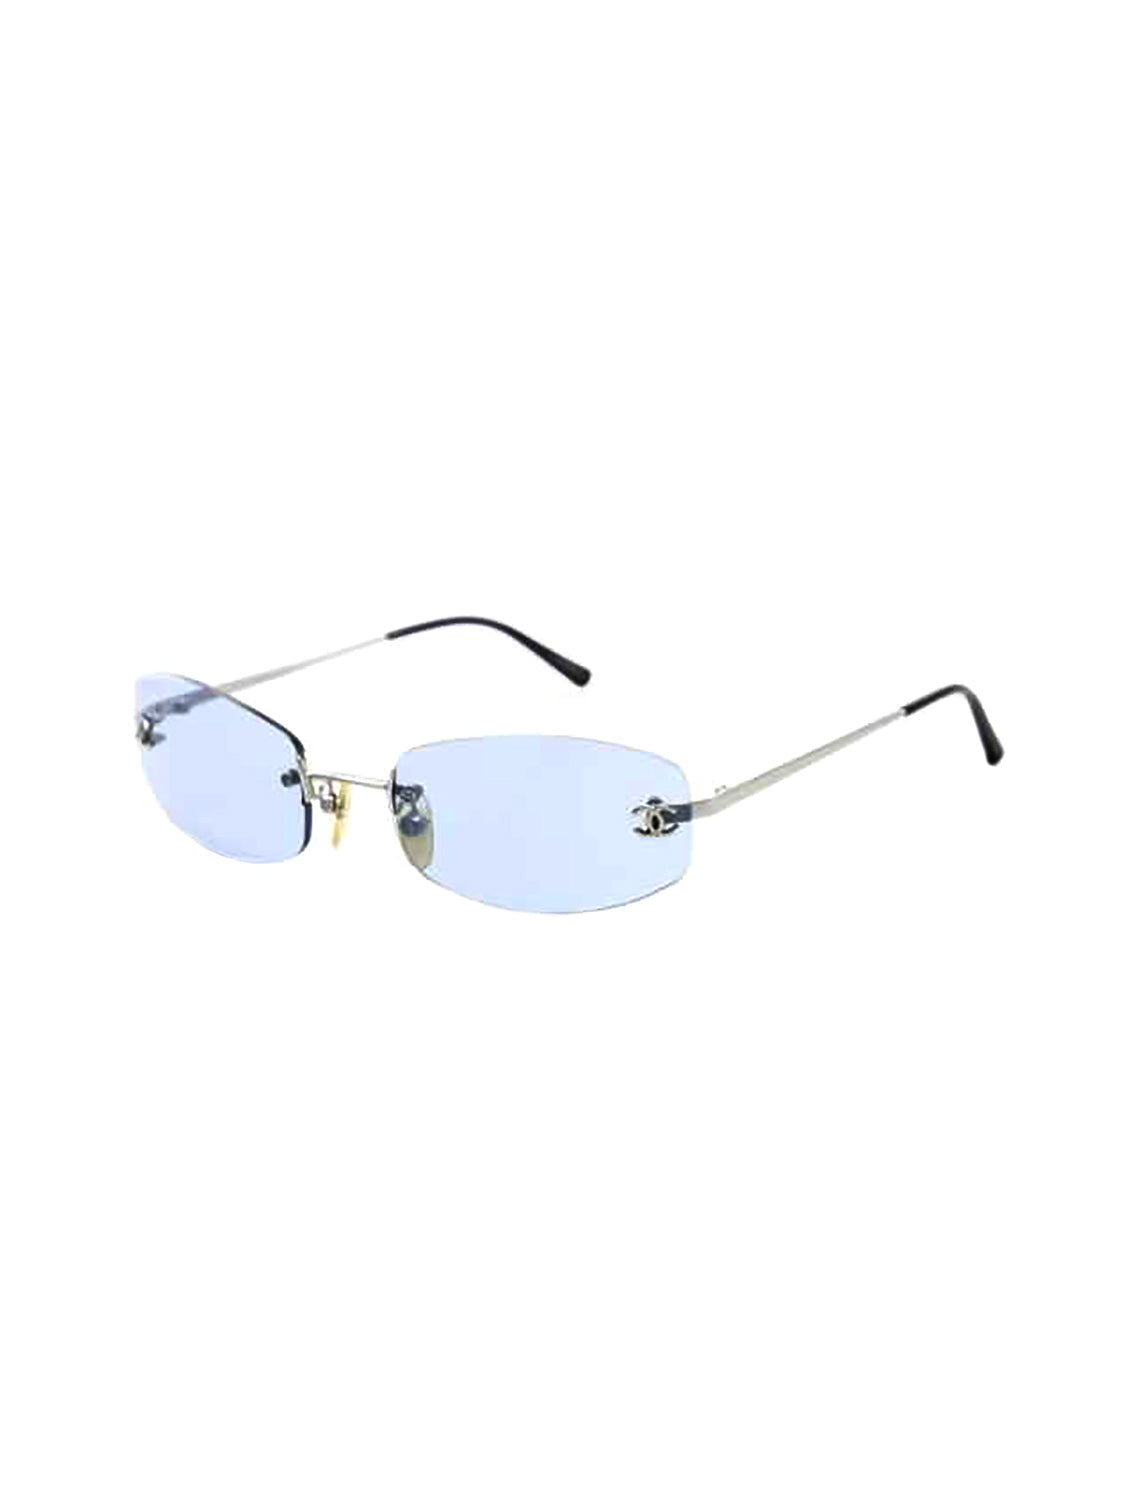 rimless 2000s vintage sunglasses - Gem